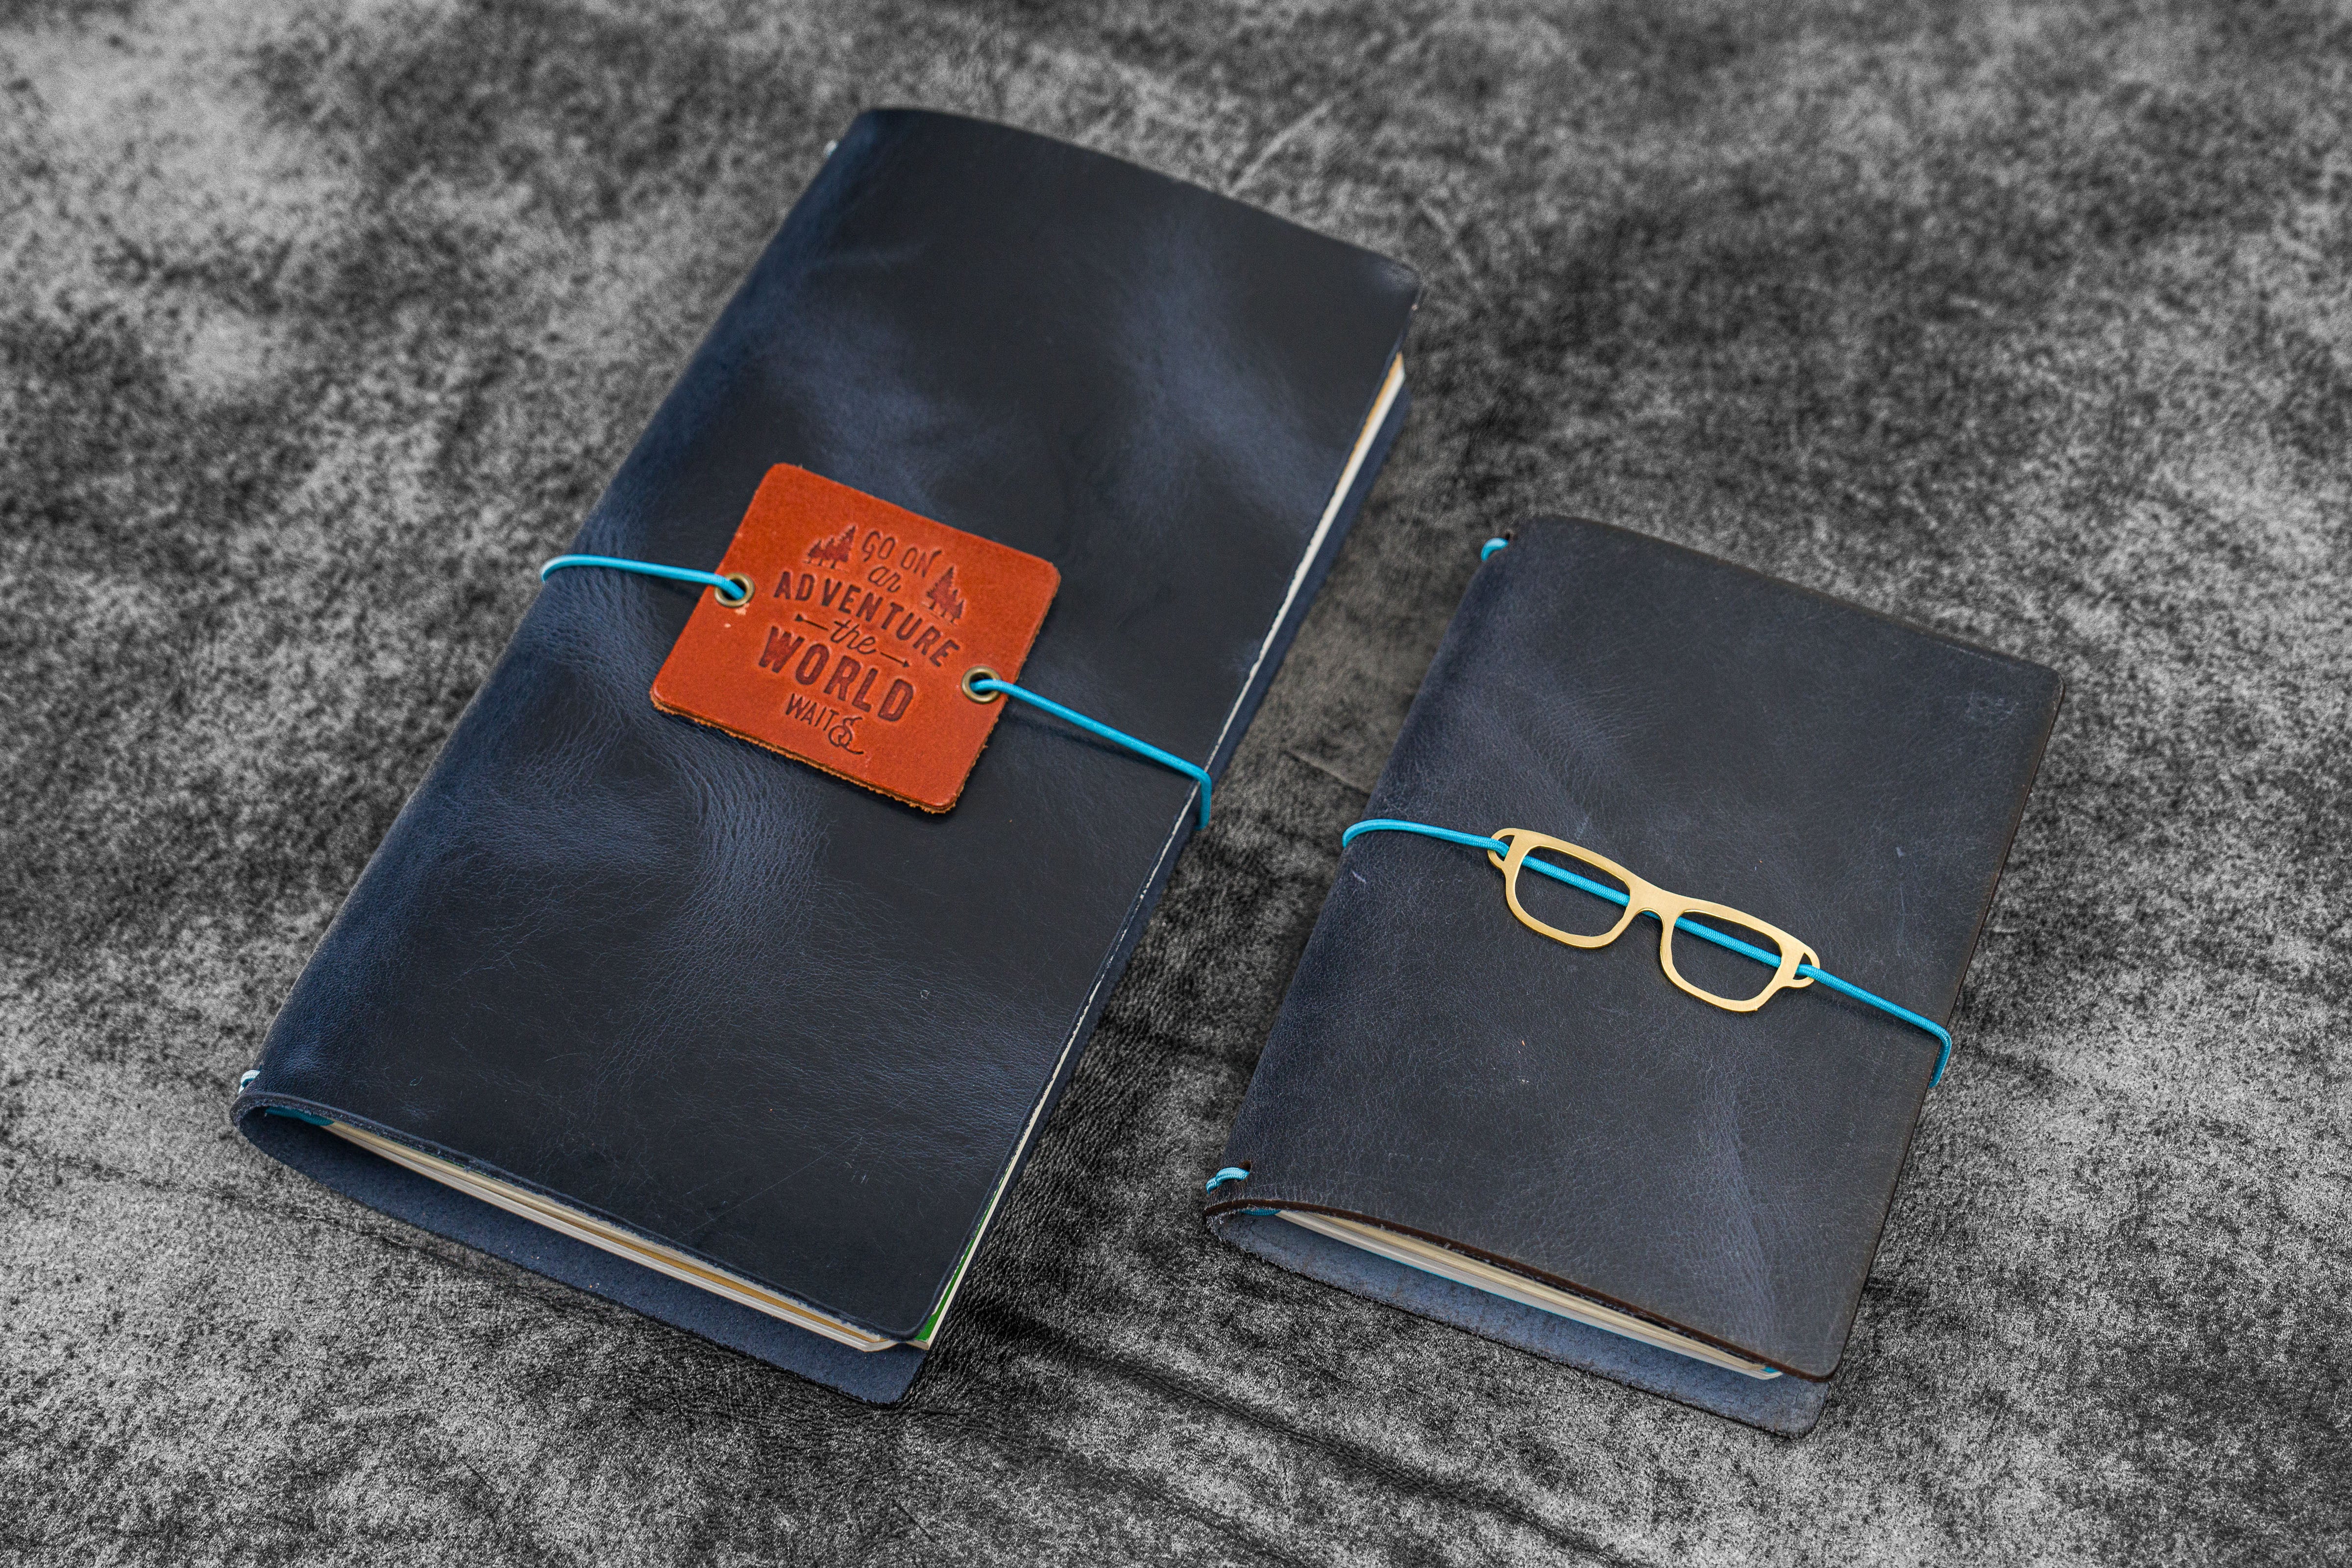 3 x Traveler's Notebook Inserts, STANDARD Size, Pink n Grey, 3